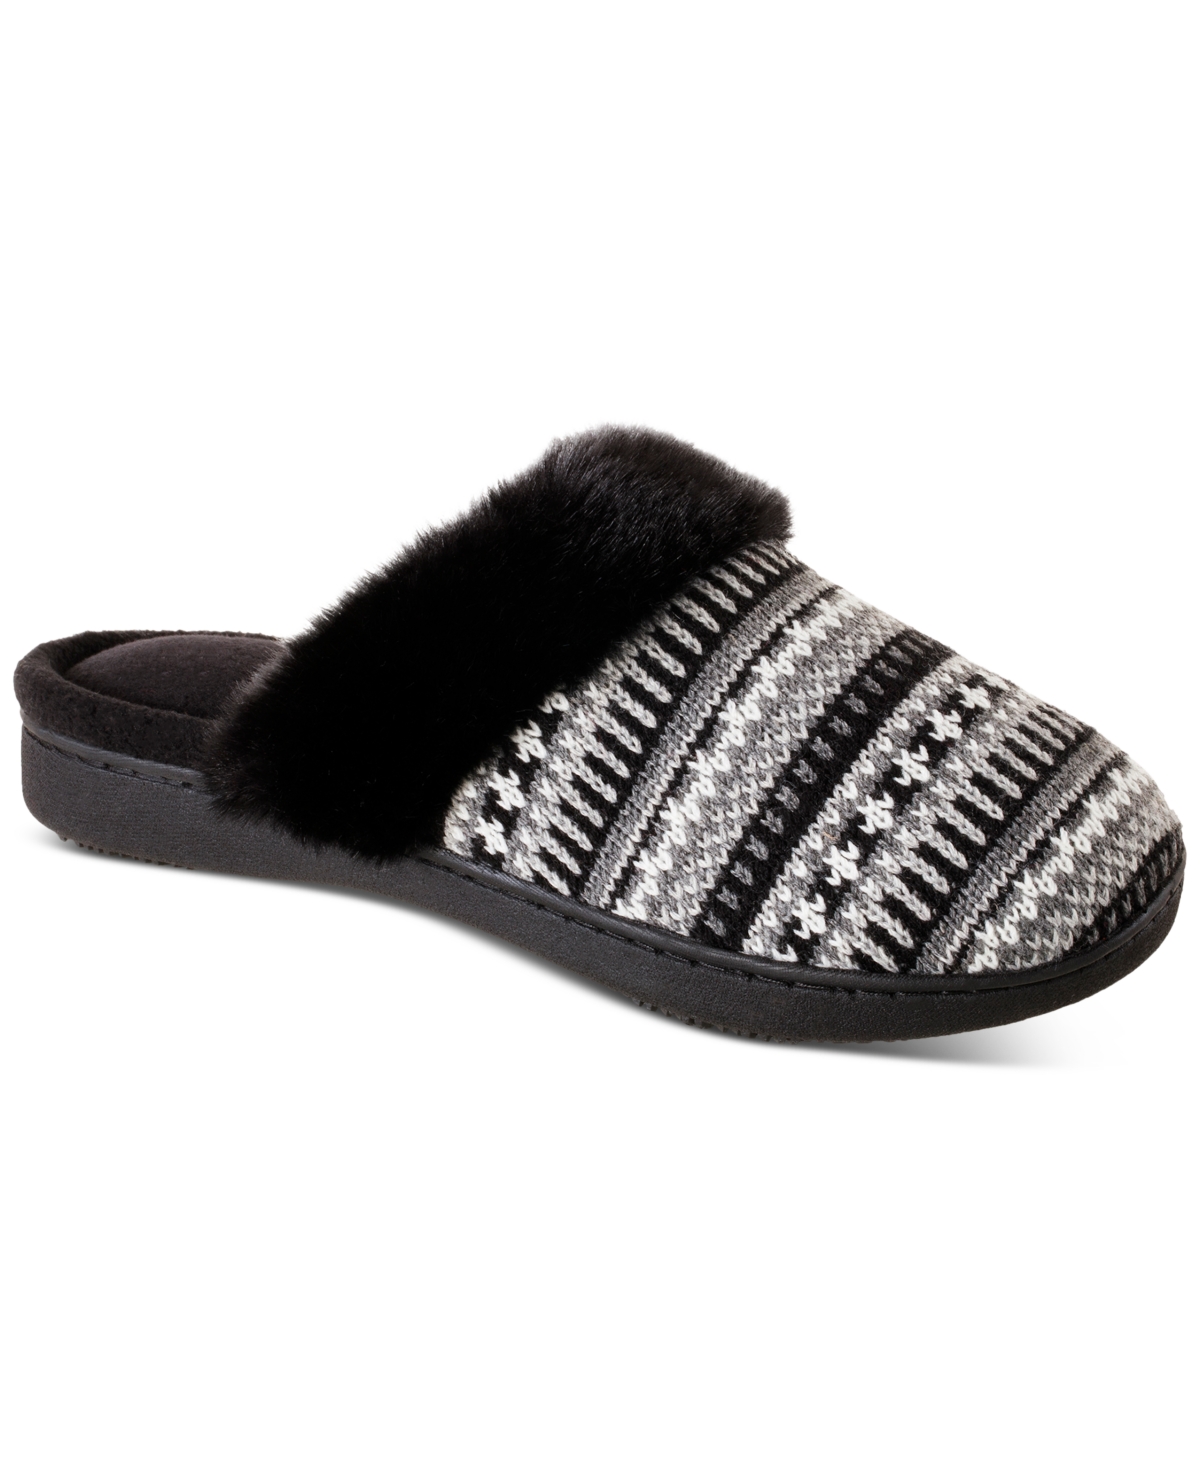 Women's Fairisle Sweater Knit Calen Clog Slippers - Blk